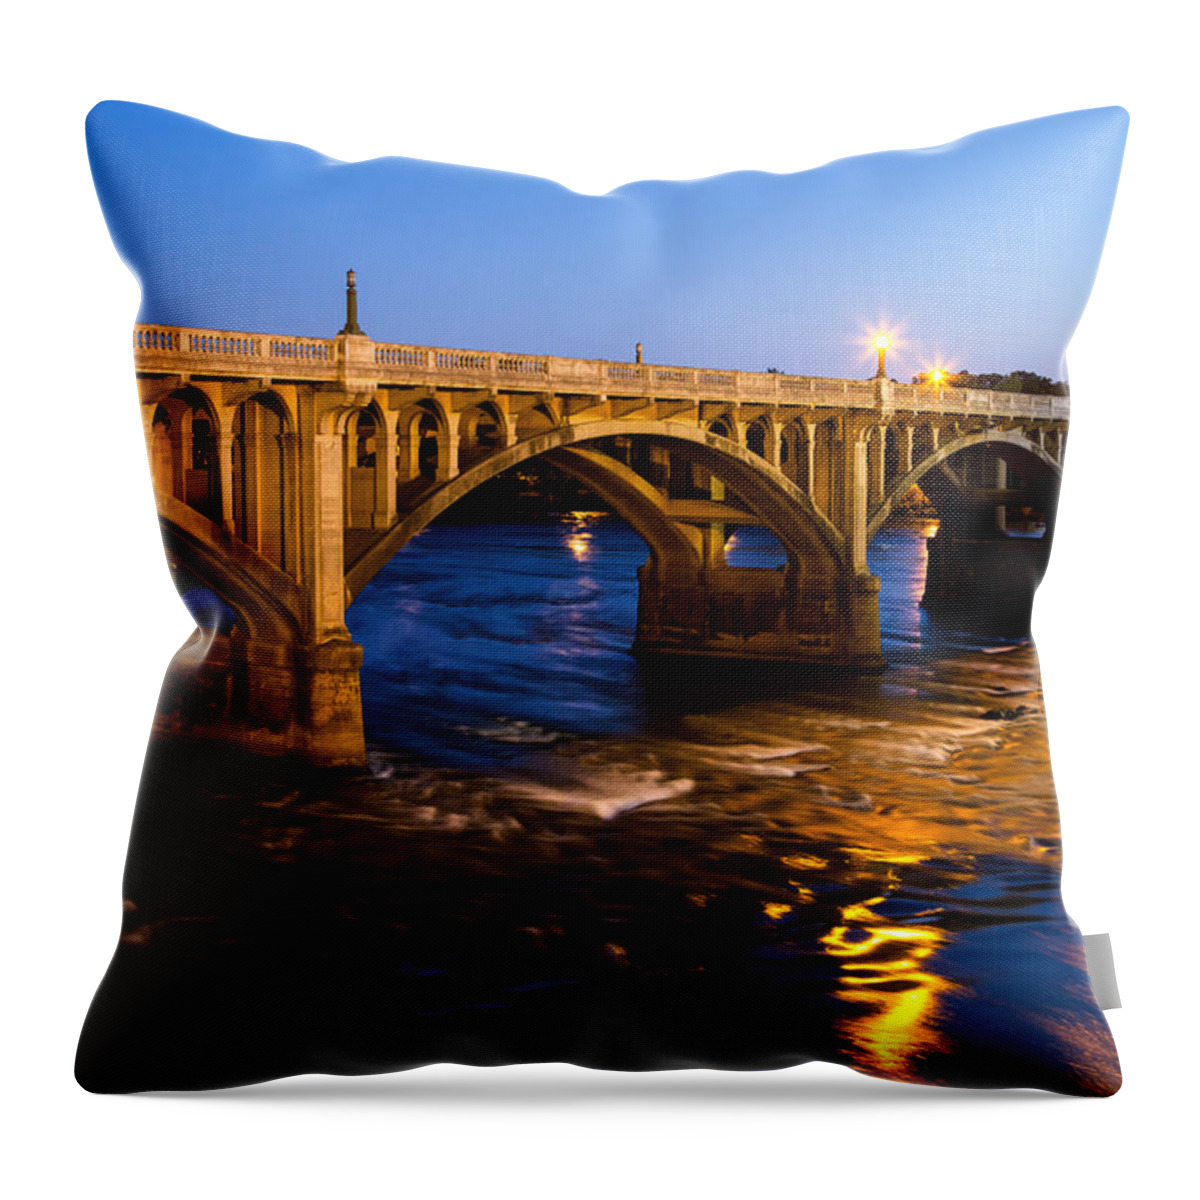 Gervais Street Bridge Throw Pillow featuring the photograph Gervais Street Bridge at Twilight by Charles Hite